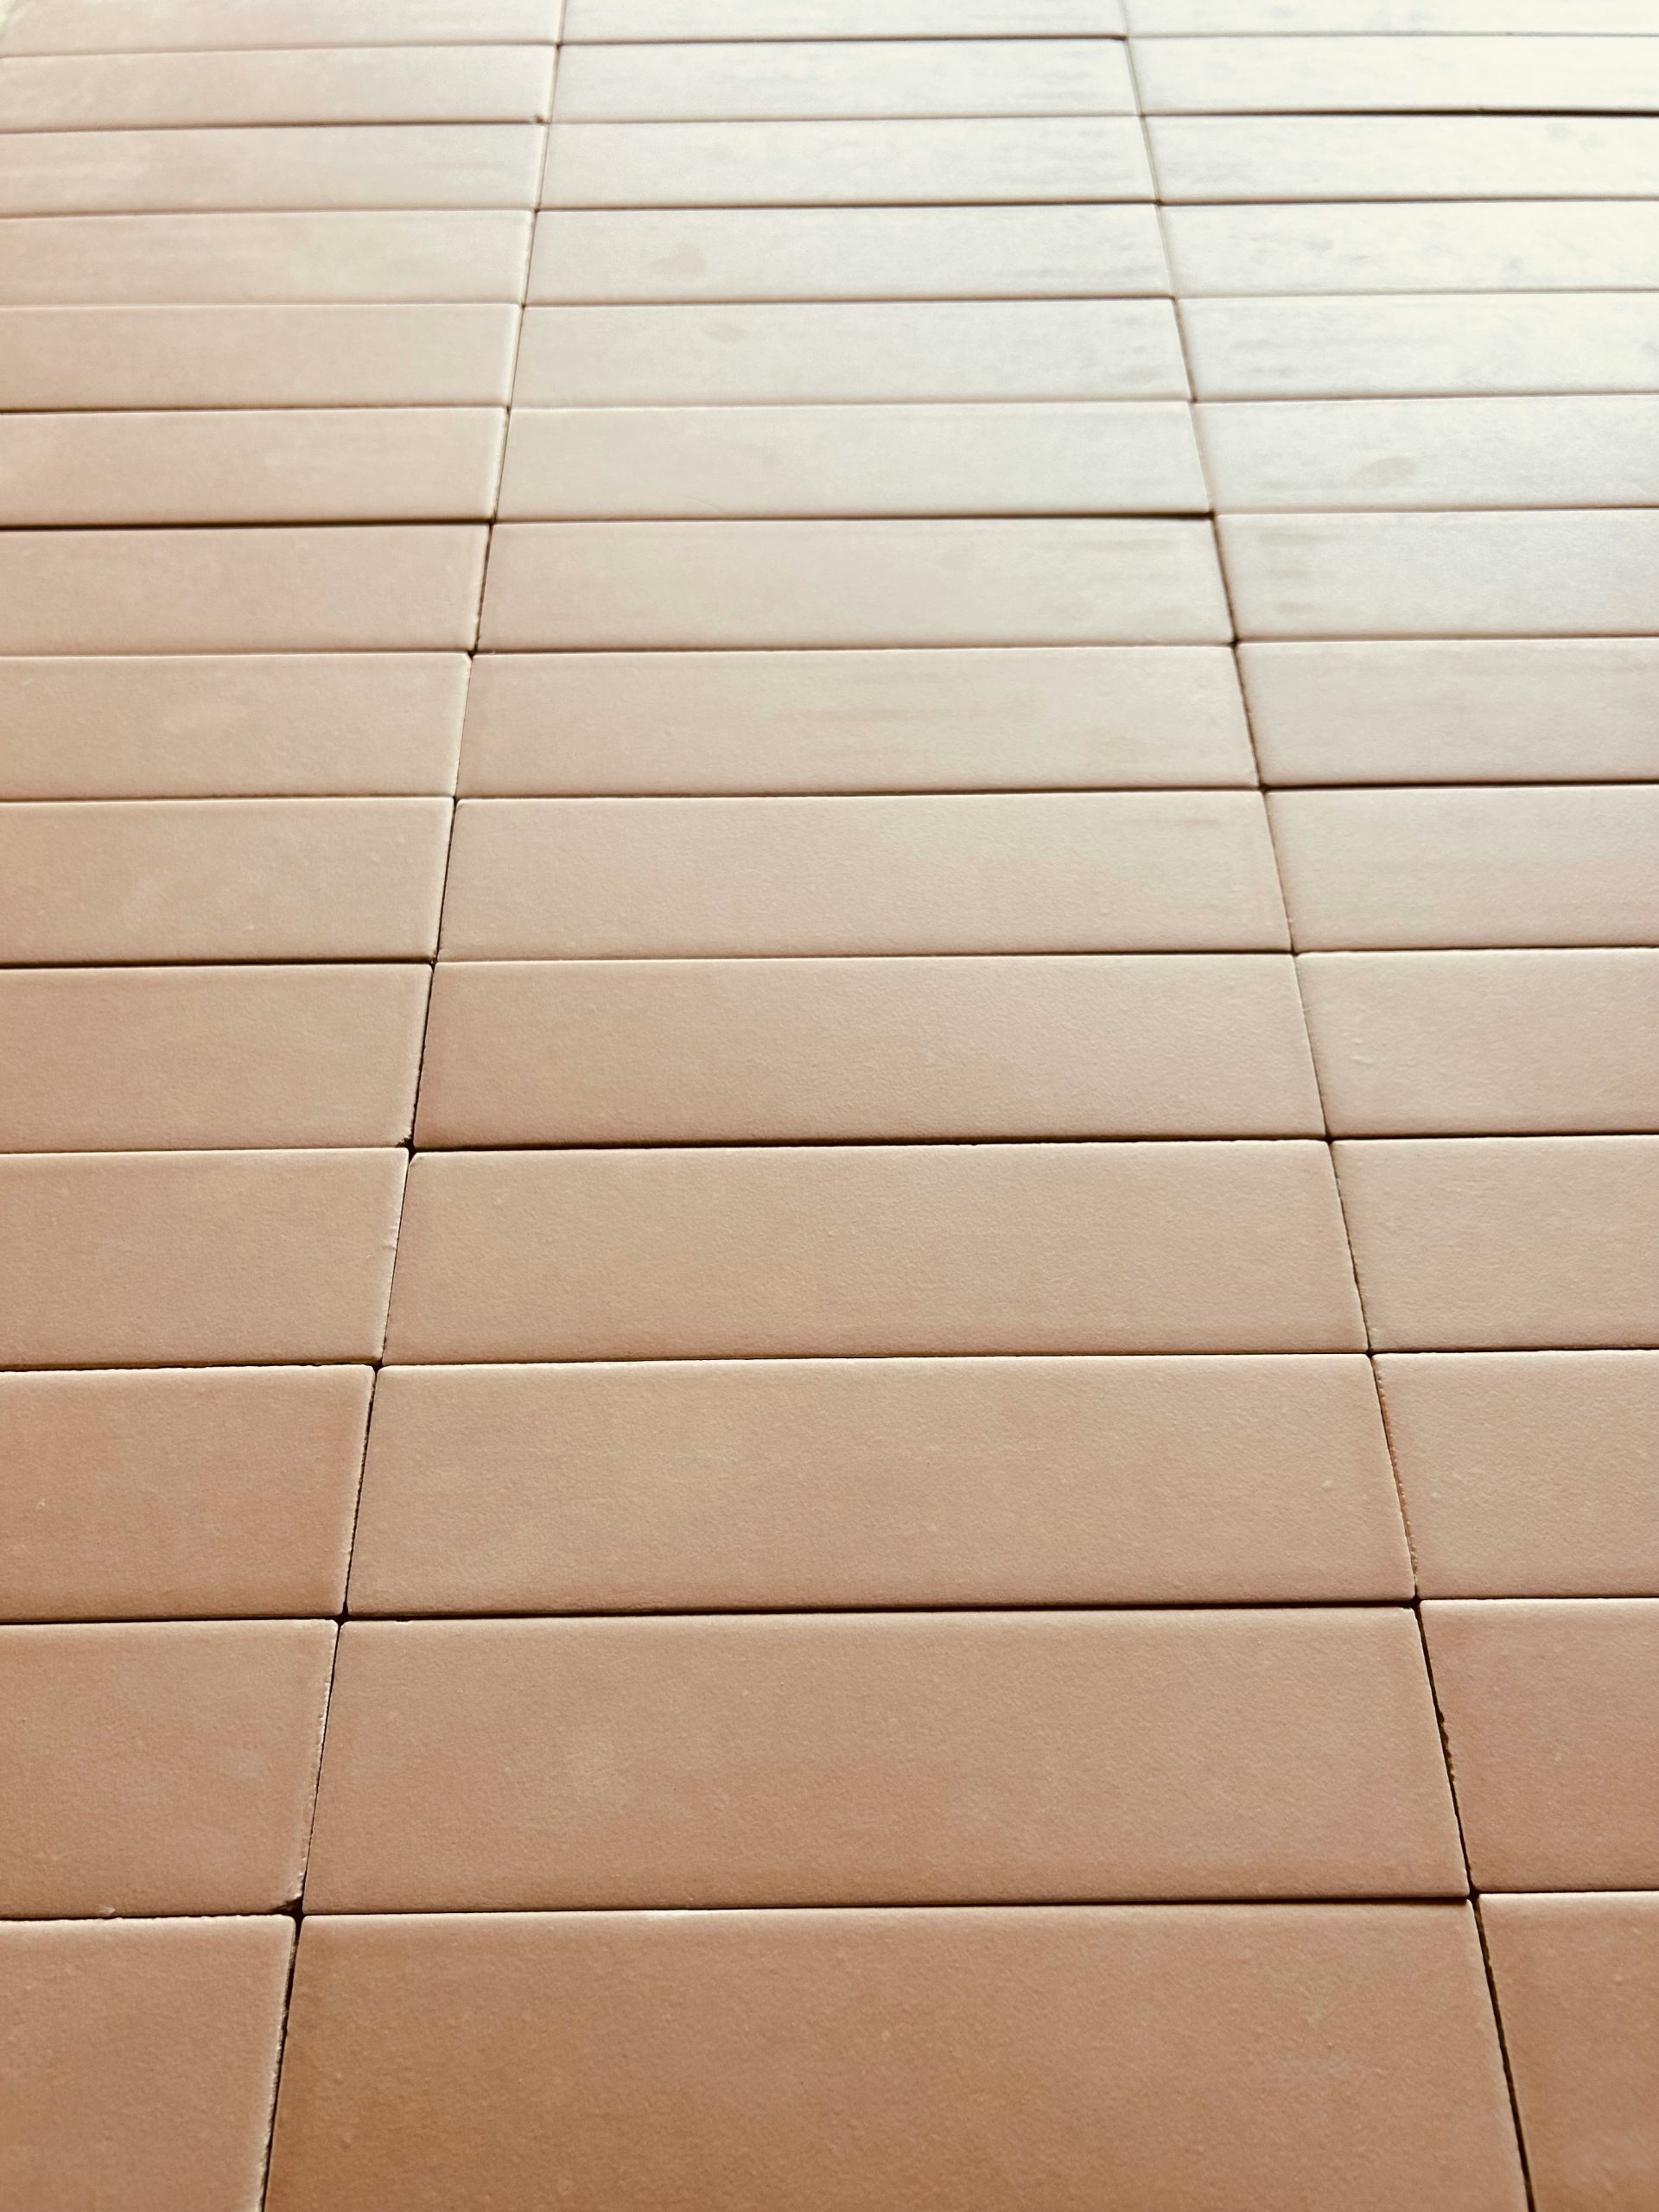 loose wall tiles